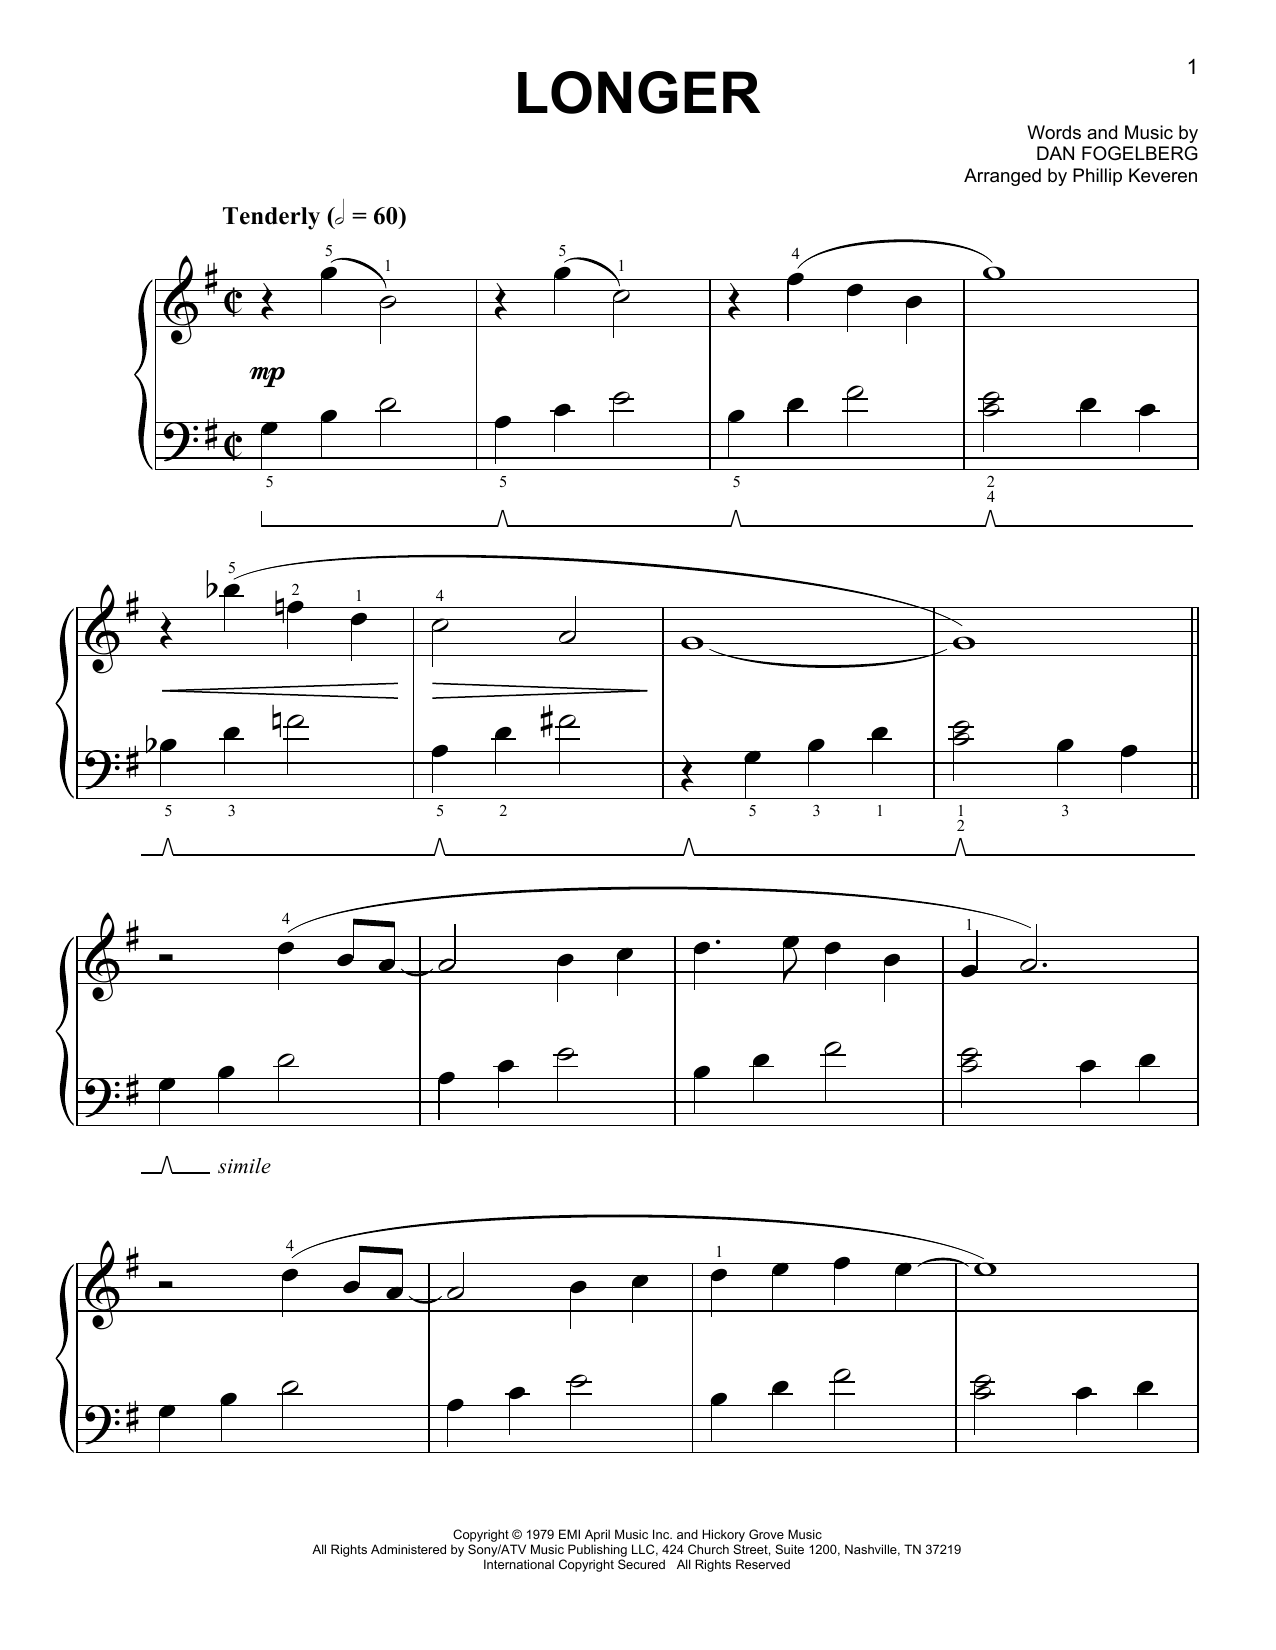 Dan Fogelberg Longer [Classical version] (arr. Phillip Keveren) Sheet Music Notes & Chords for Easy Piano - Download or Print PDF